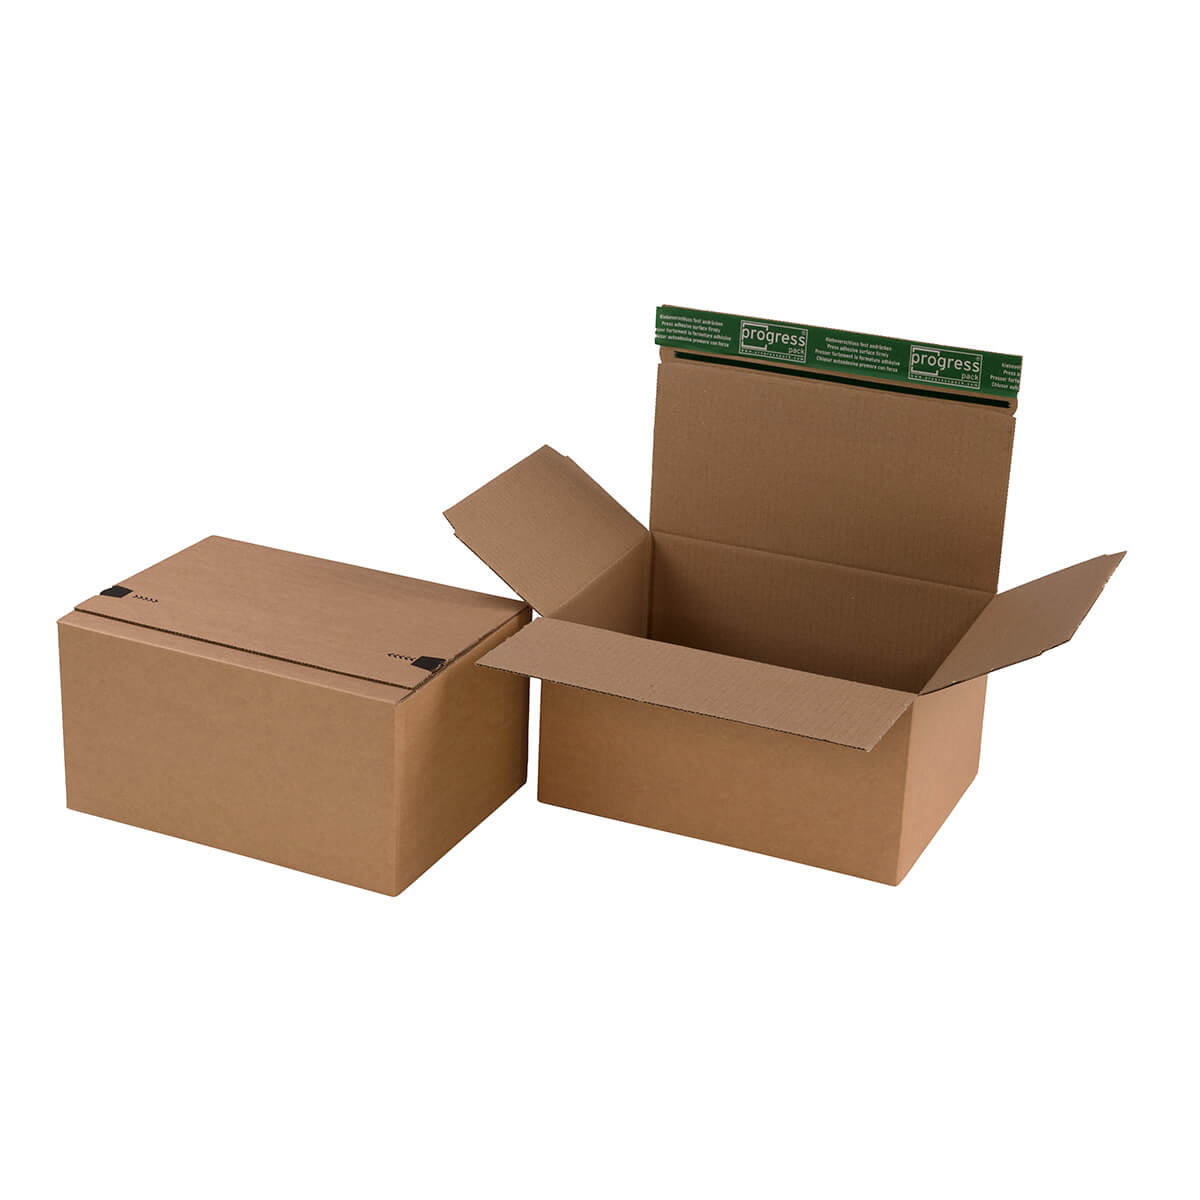 Folding carton 1-wall 310x230x110 mm din a4 self-adhesive + tear strip - progressPACK